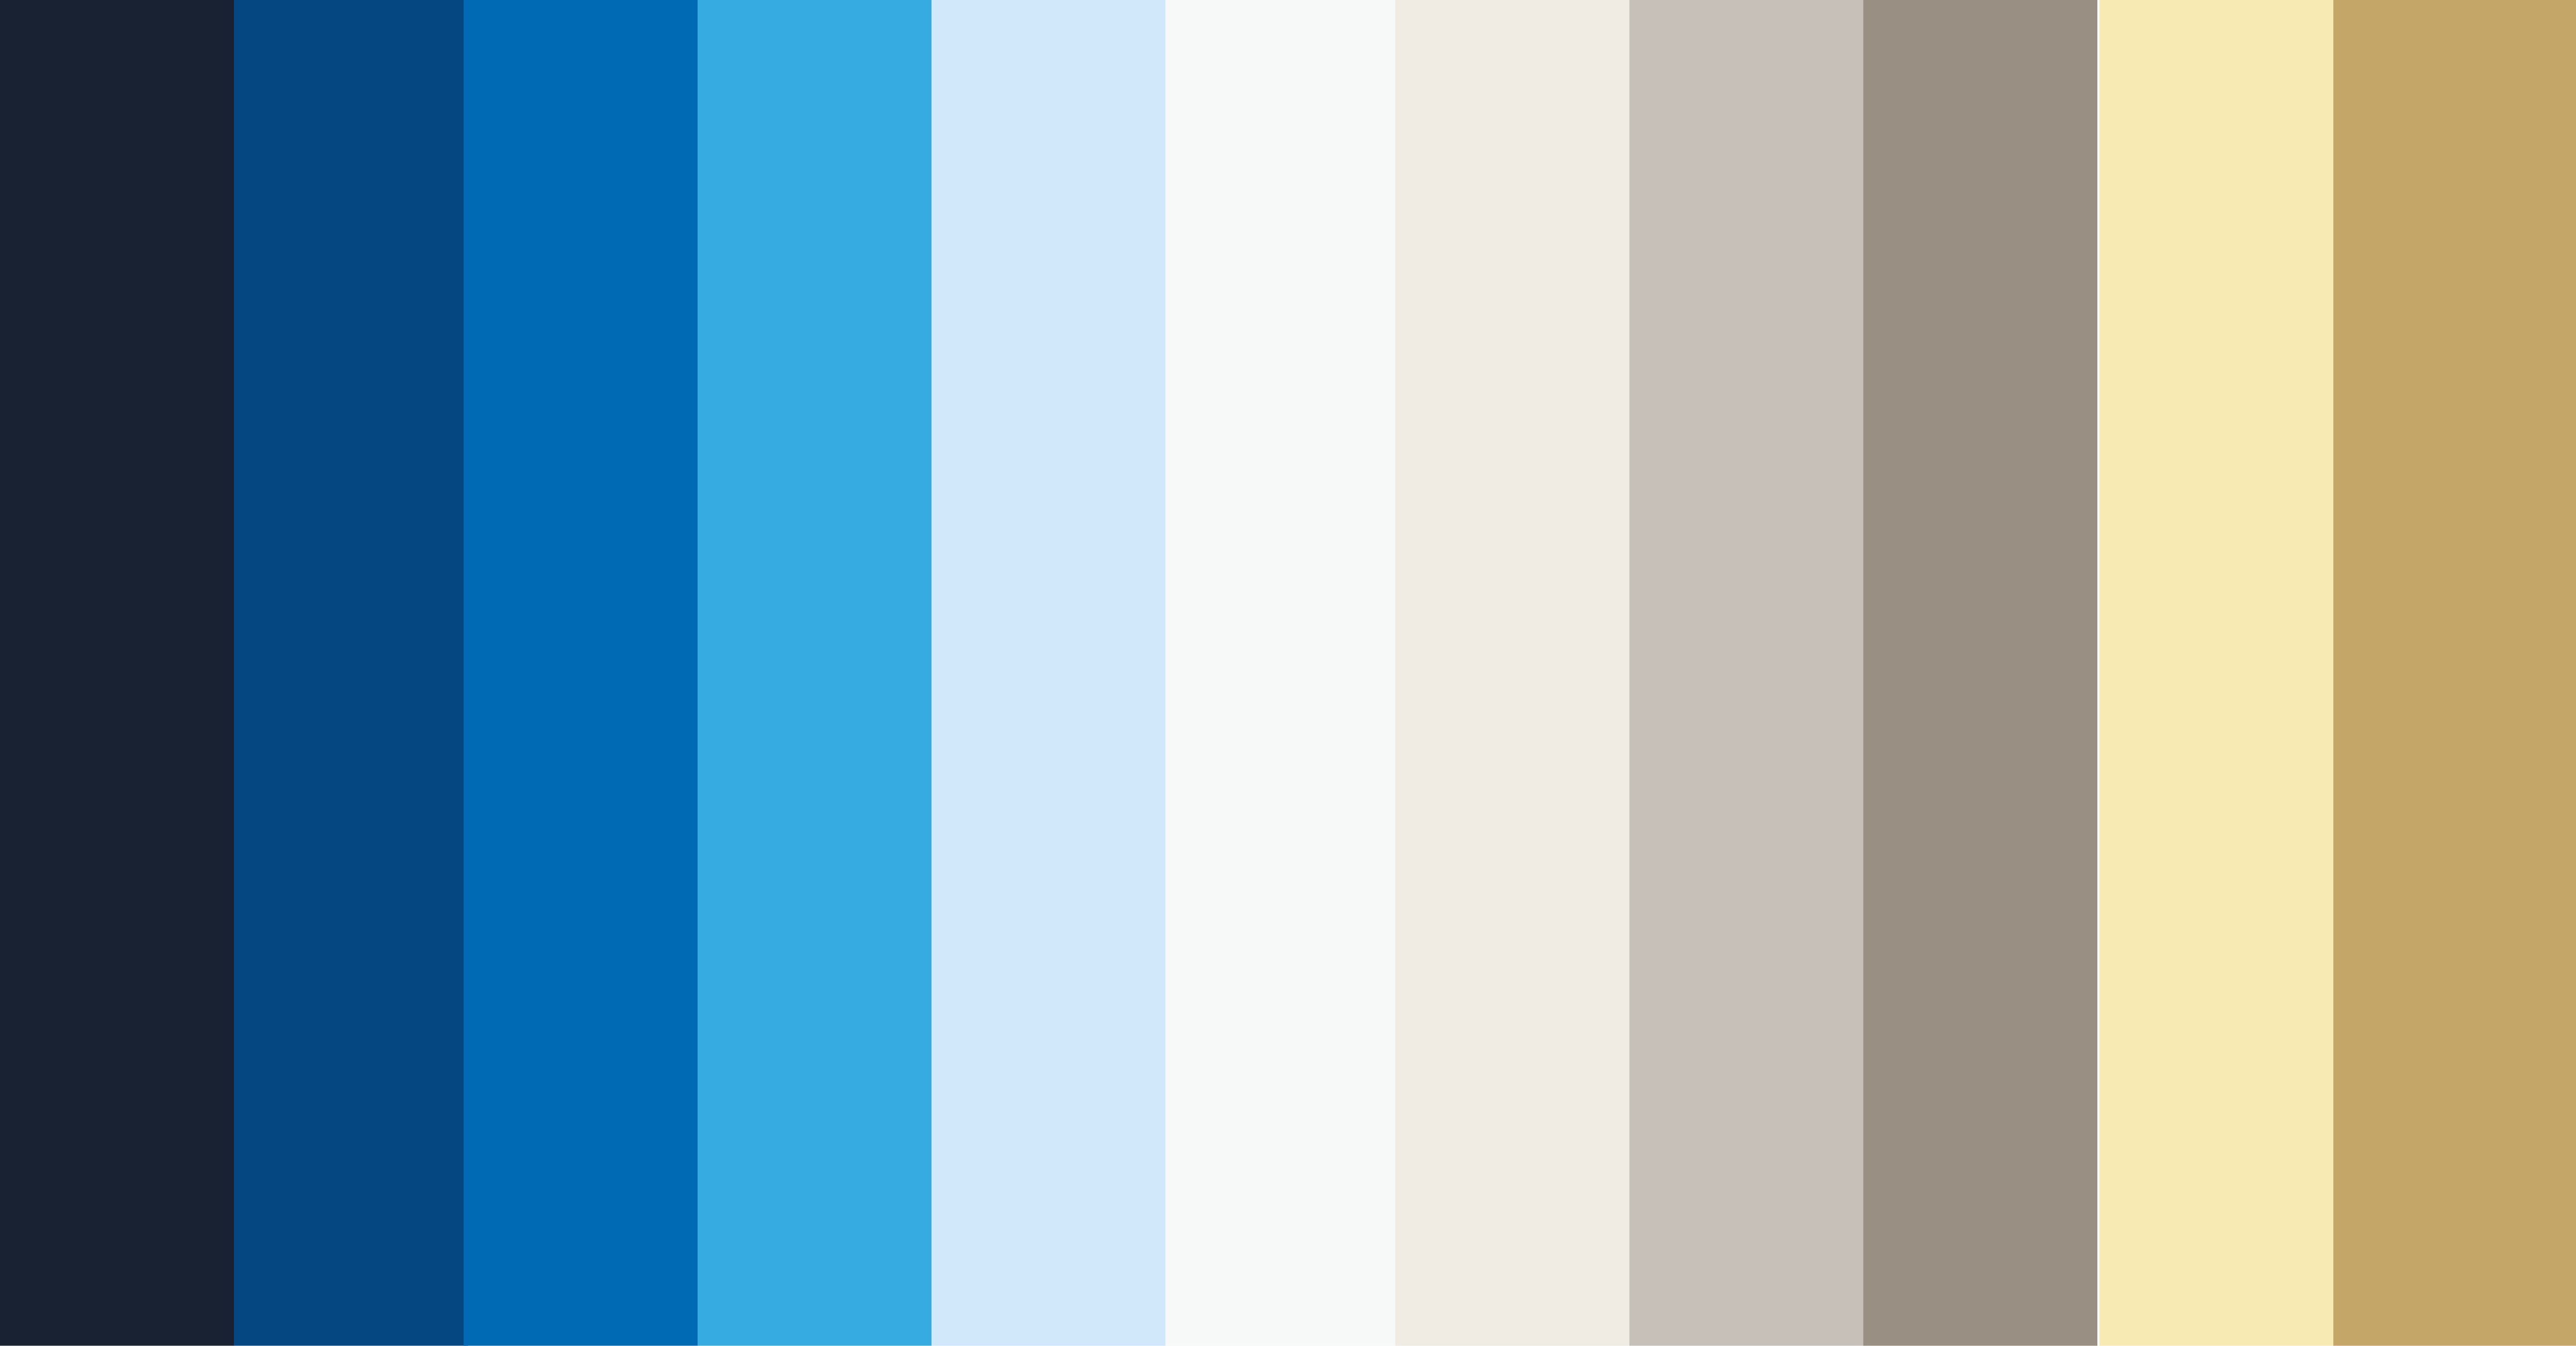 Colours sectionimage